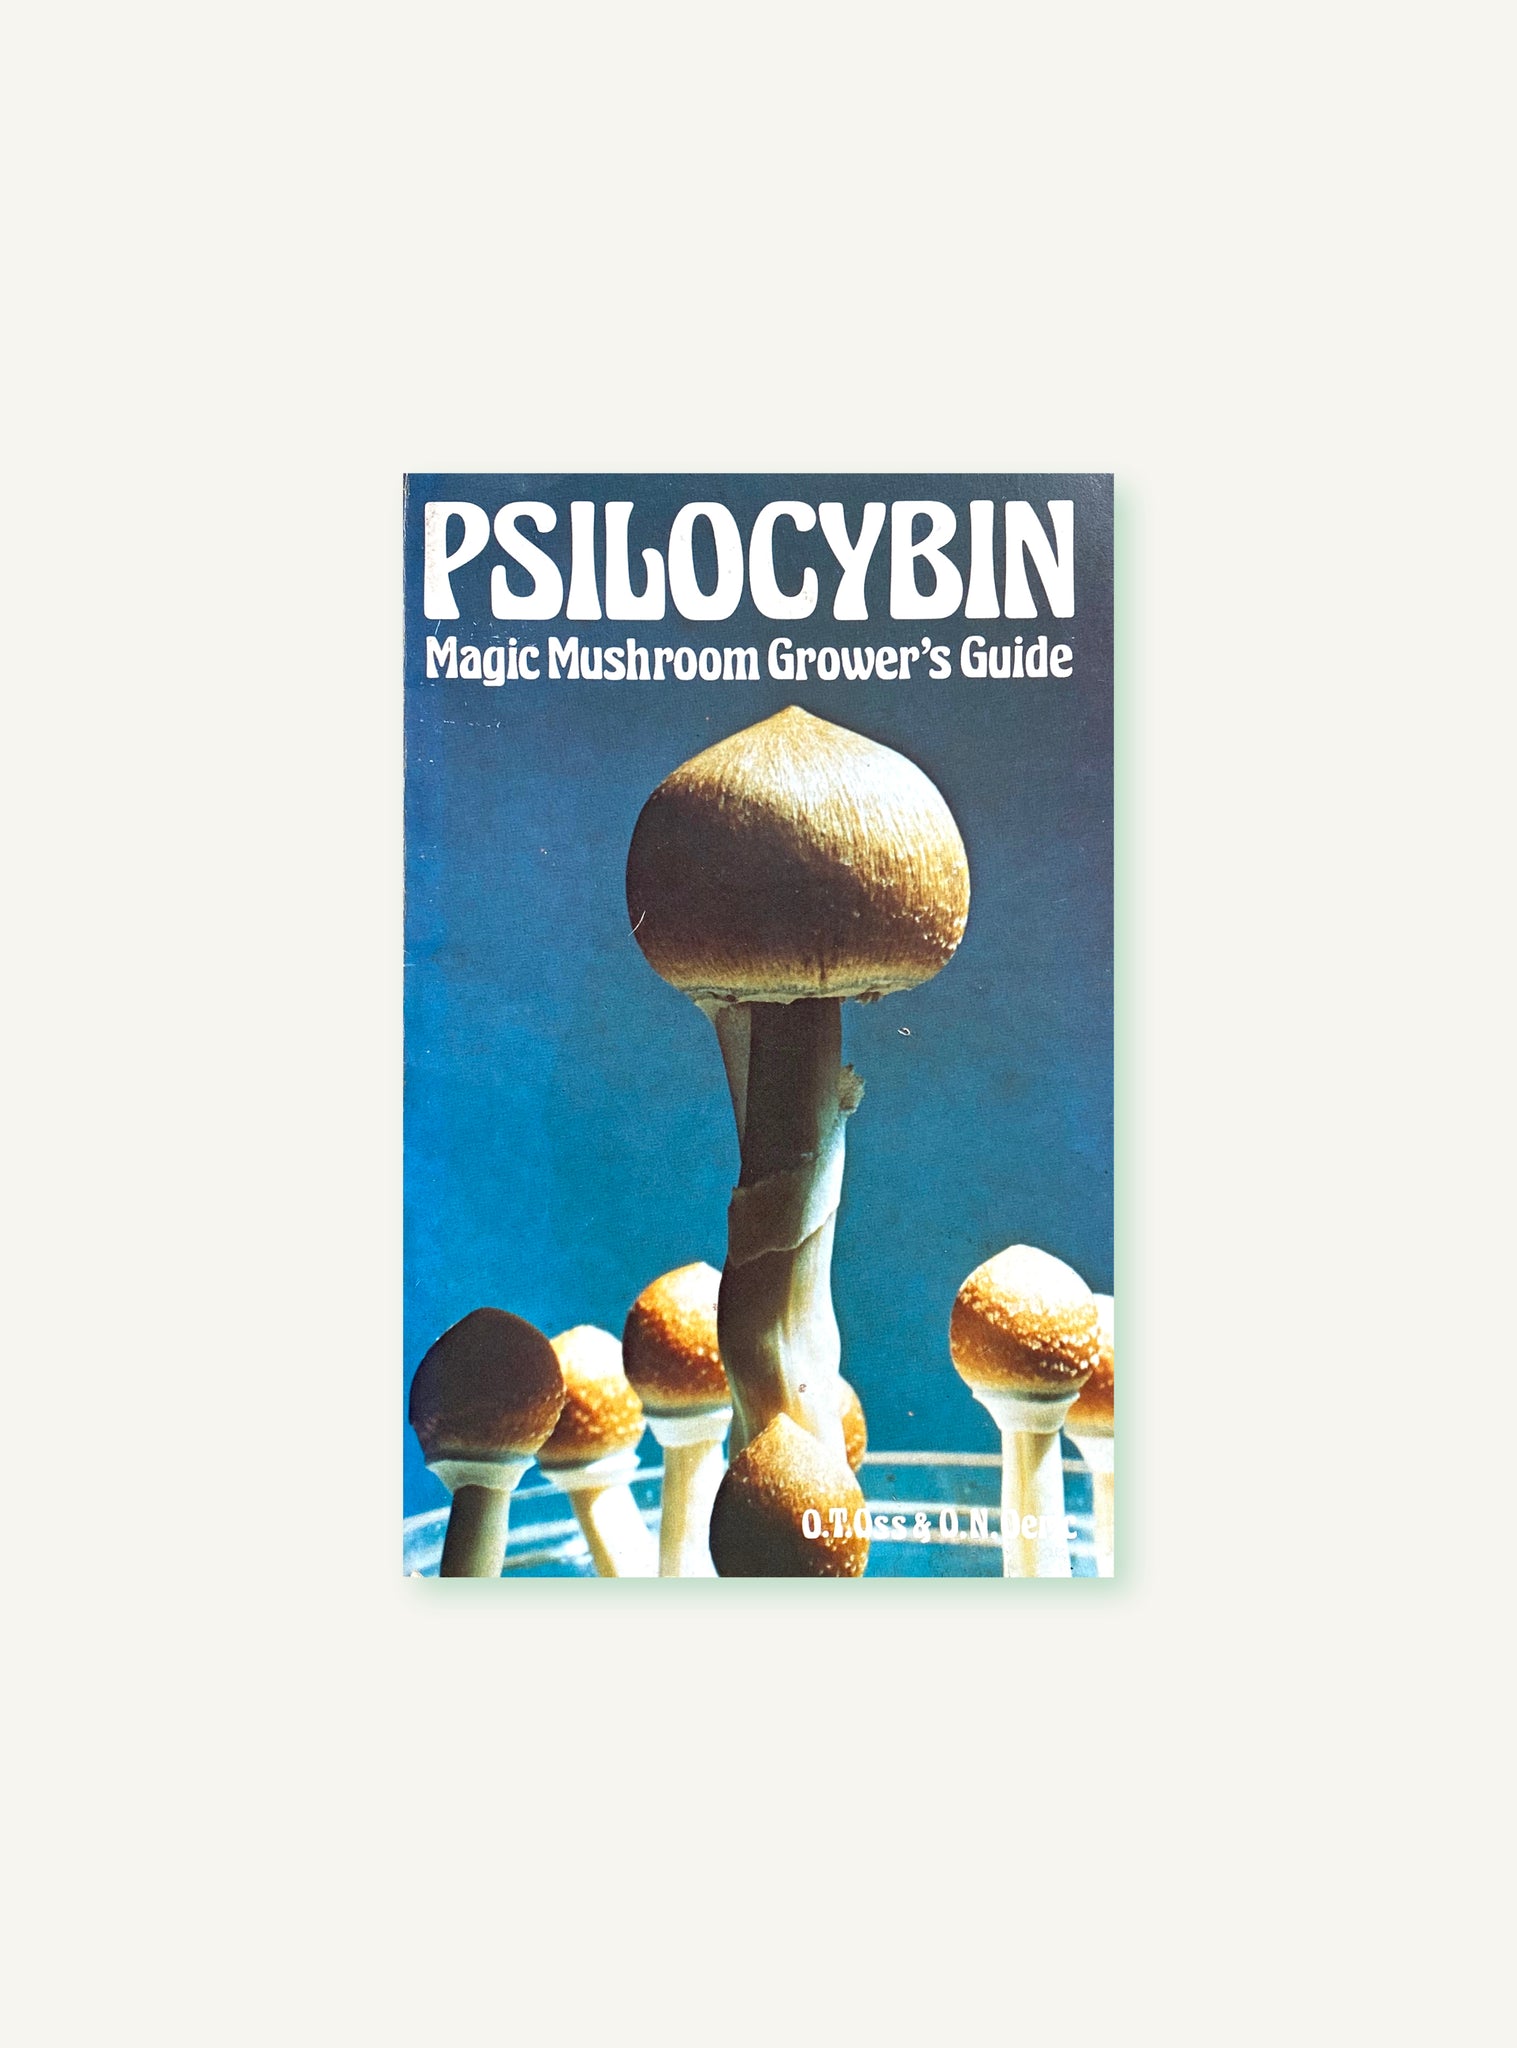 Psilocybin: Magic Mushroom Grower's Guide By O.T. Oss & O.N. Oeric